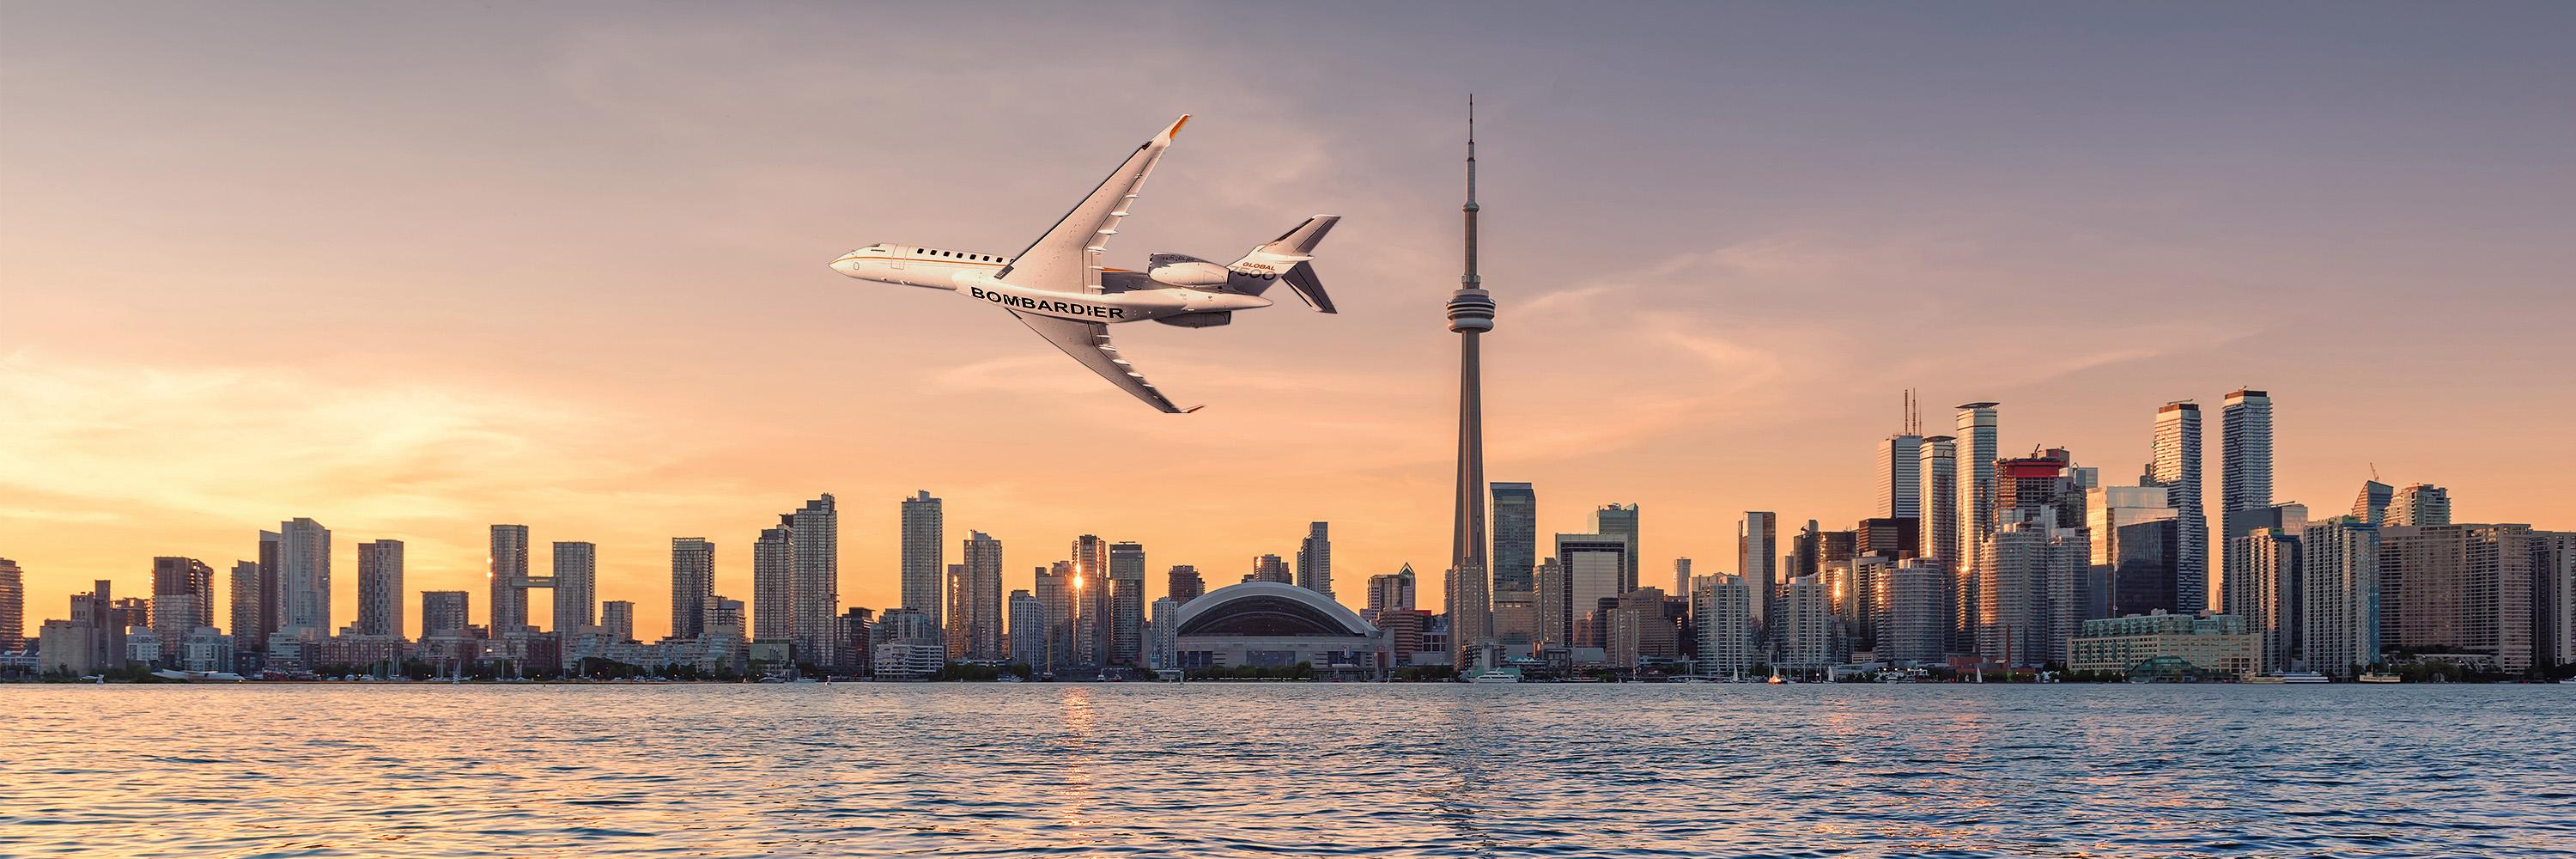 Vue de Toronto & avion